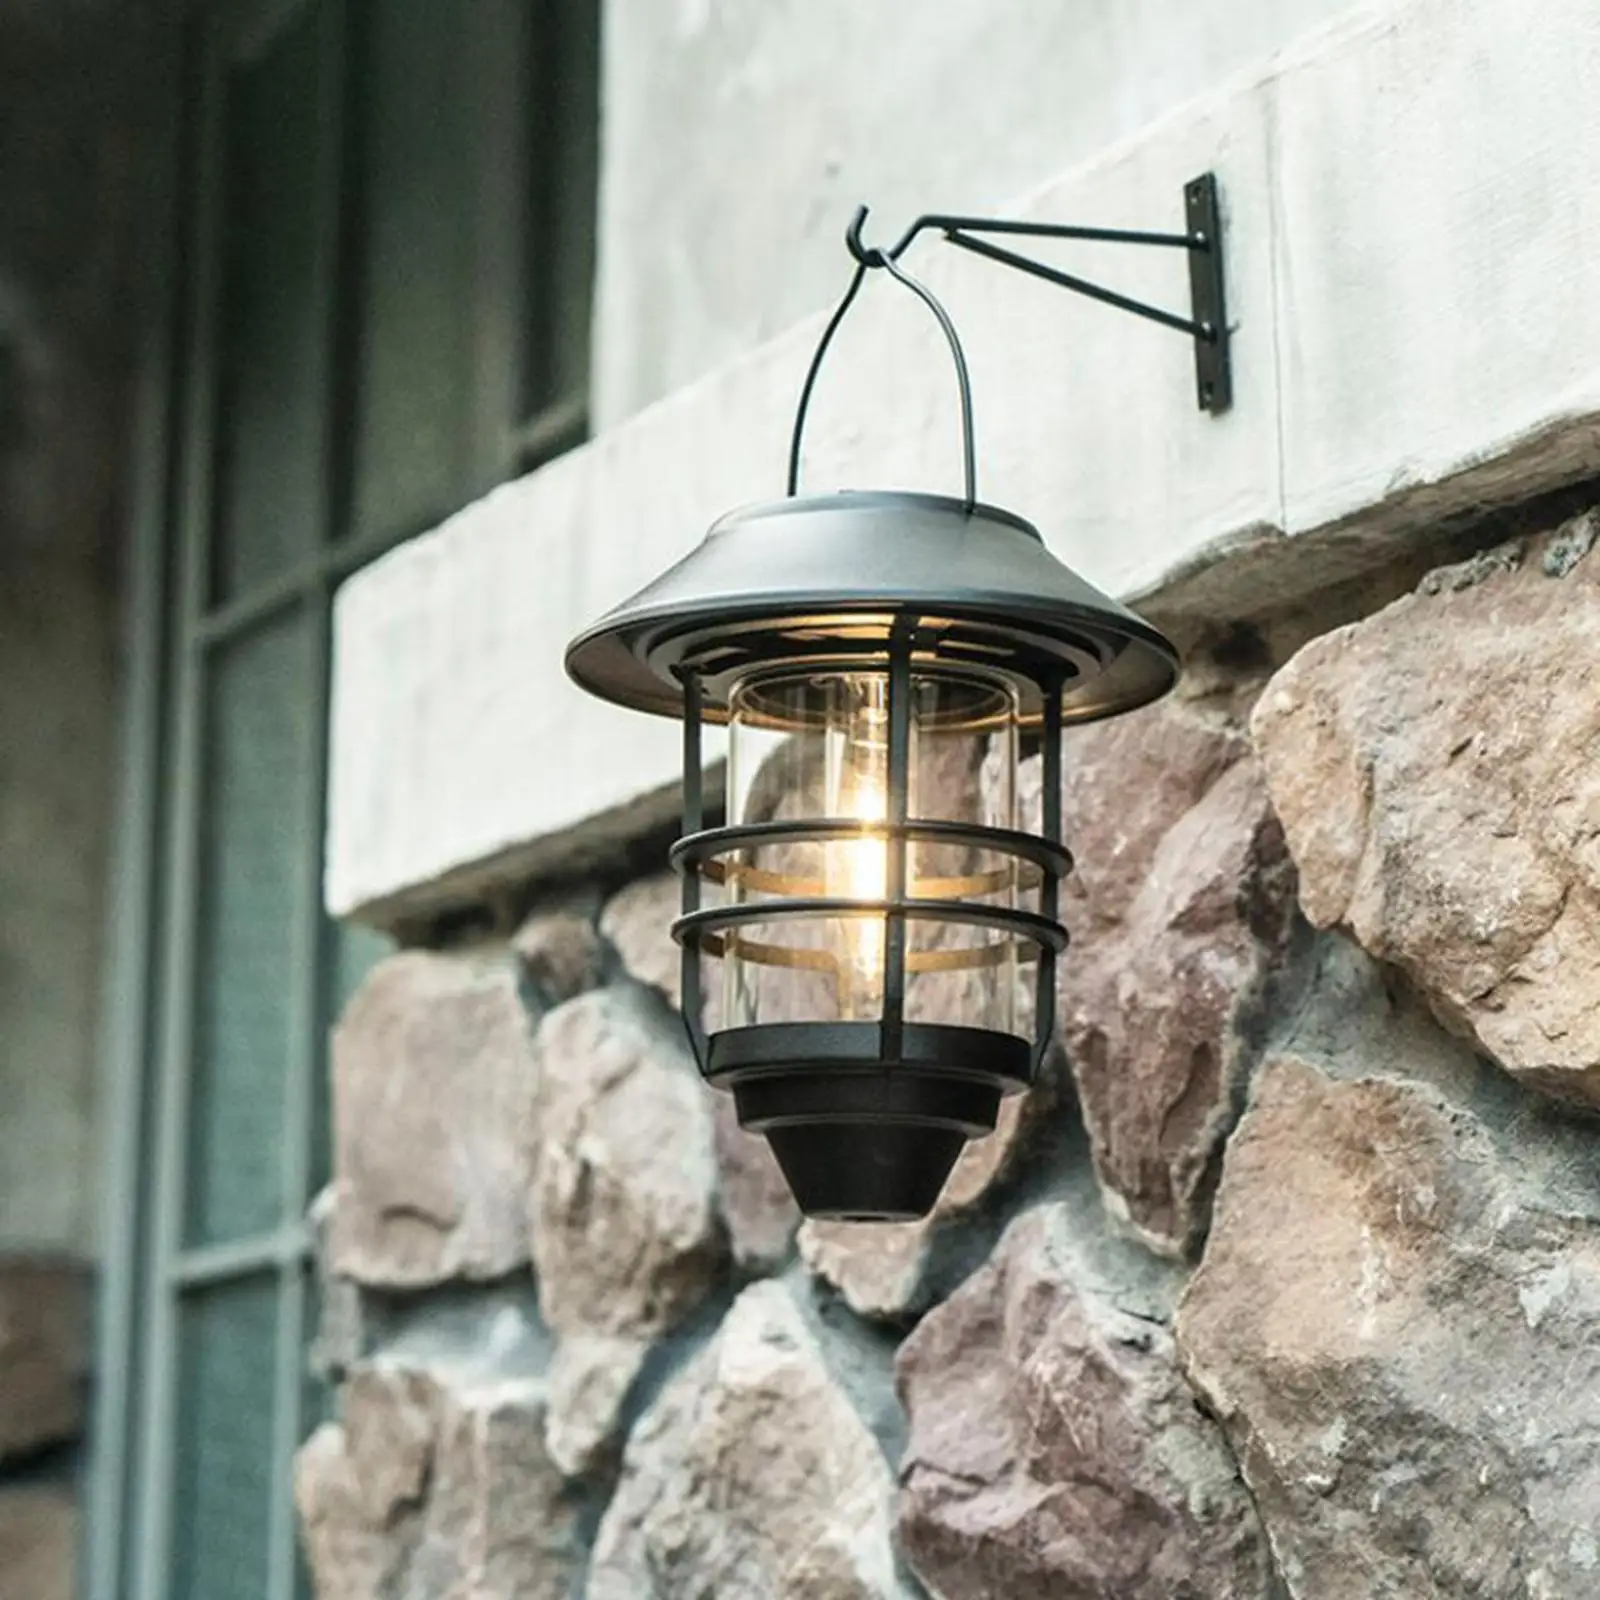 Solar Powered Hanging Lantern Light Fixture Sconce Lamp Waterproof Warm White Metal for Outdoor Yard Garden Porch Patio